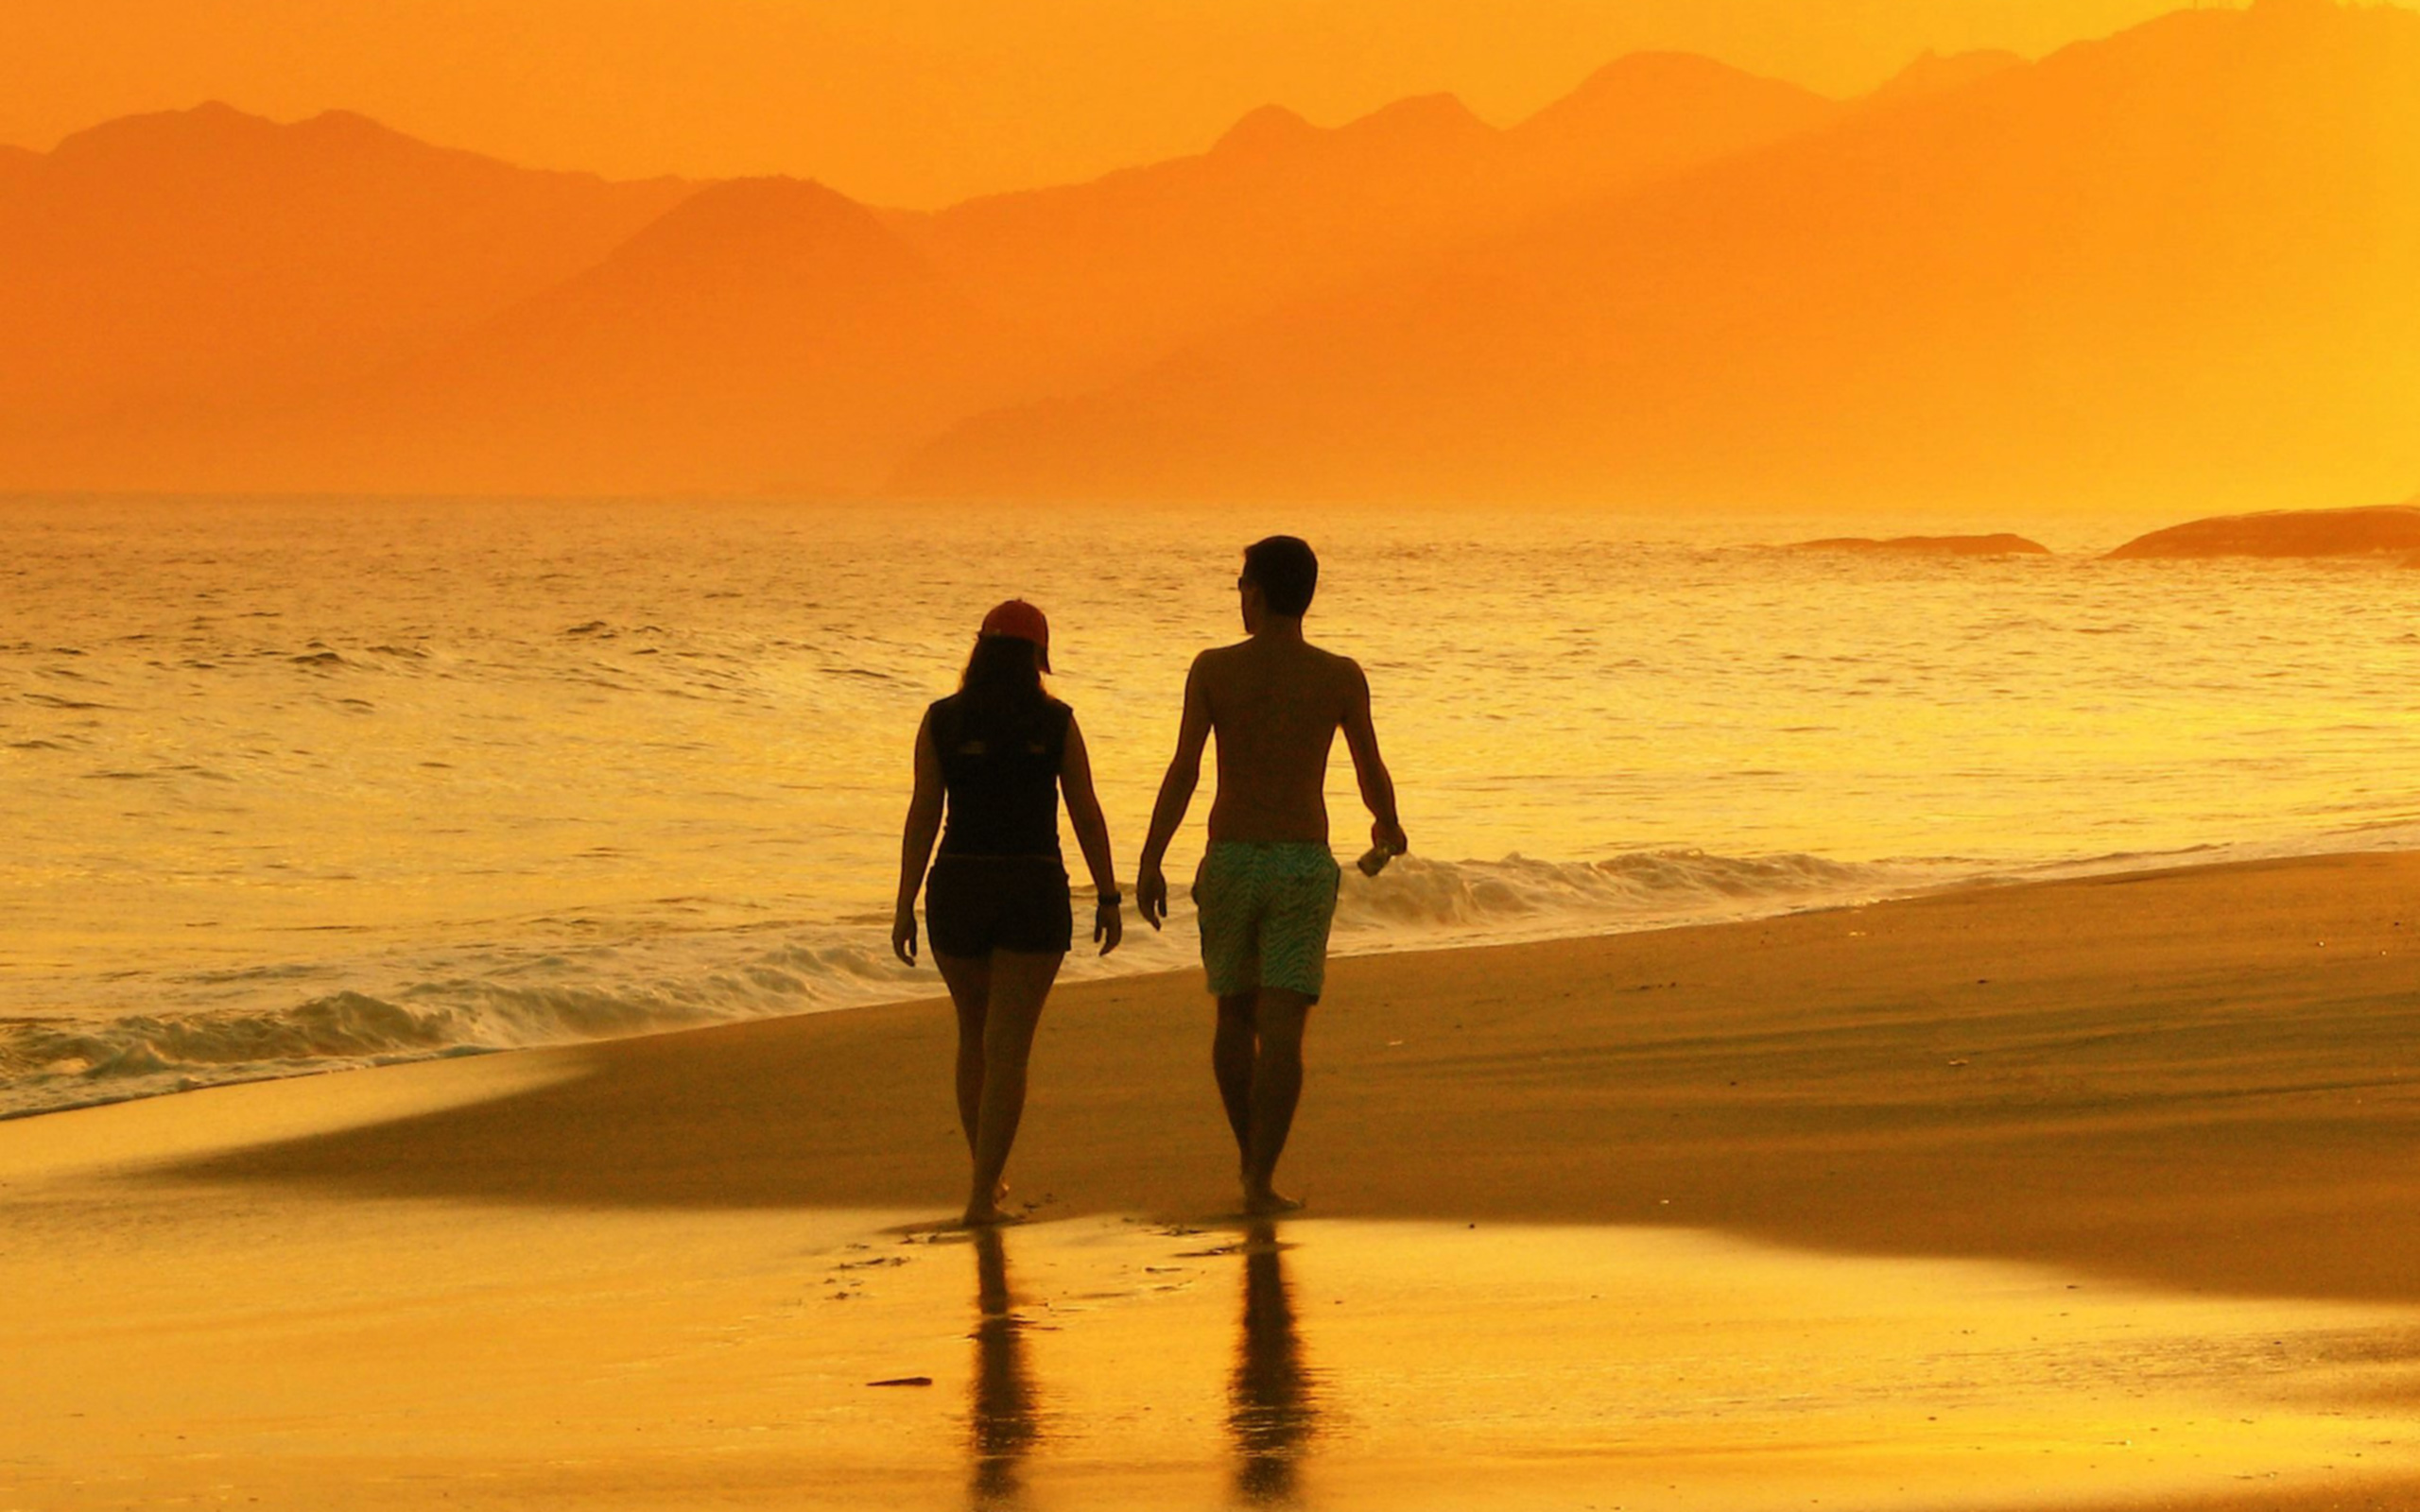 Sunset beach couple walking hand in hand along the orange ocean shore.